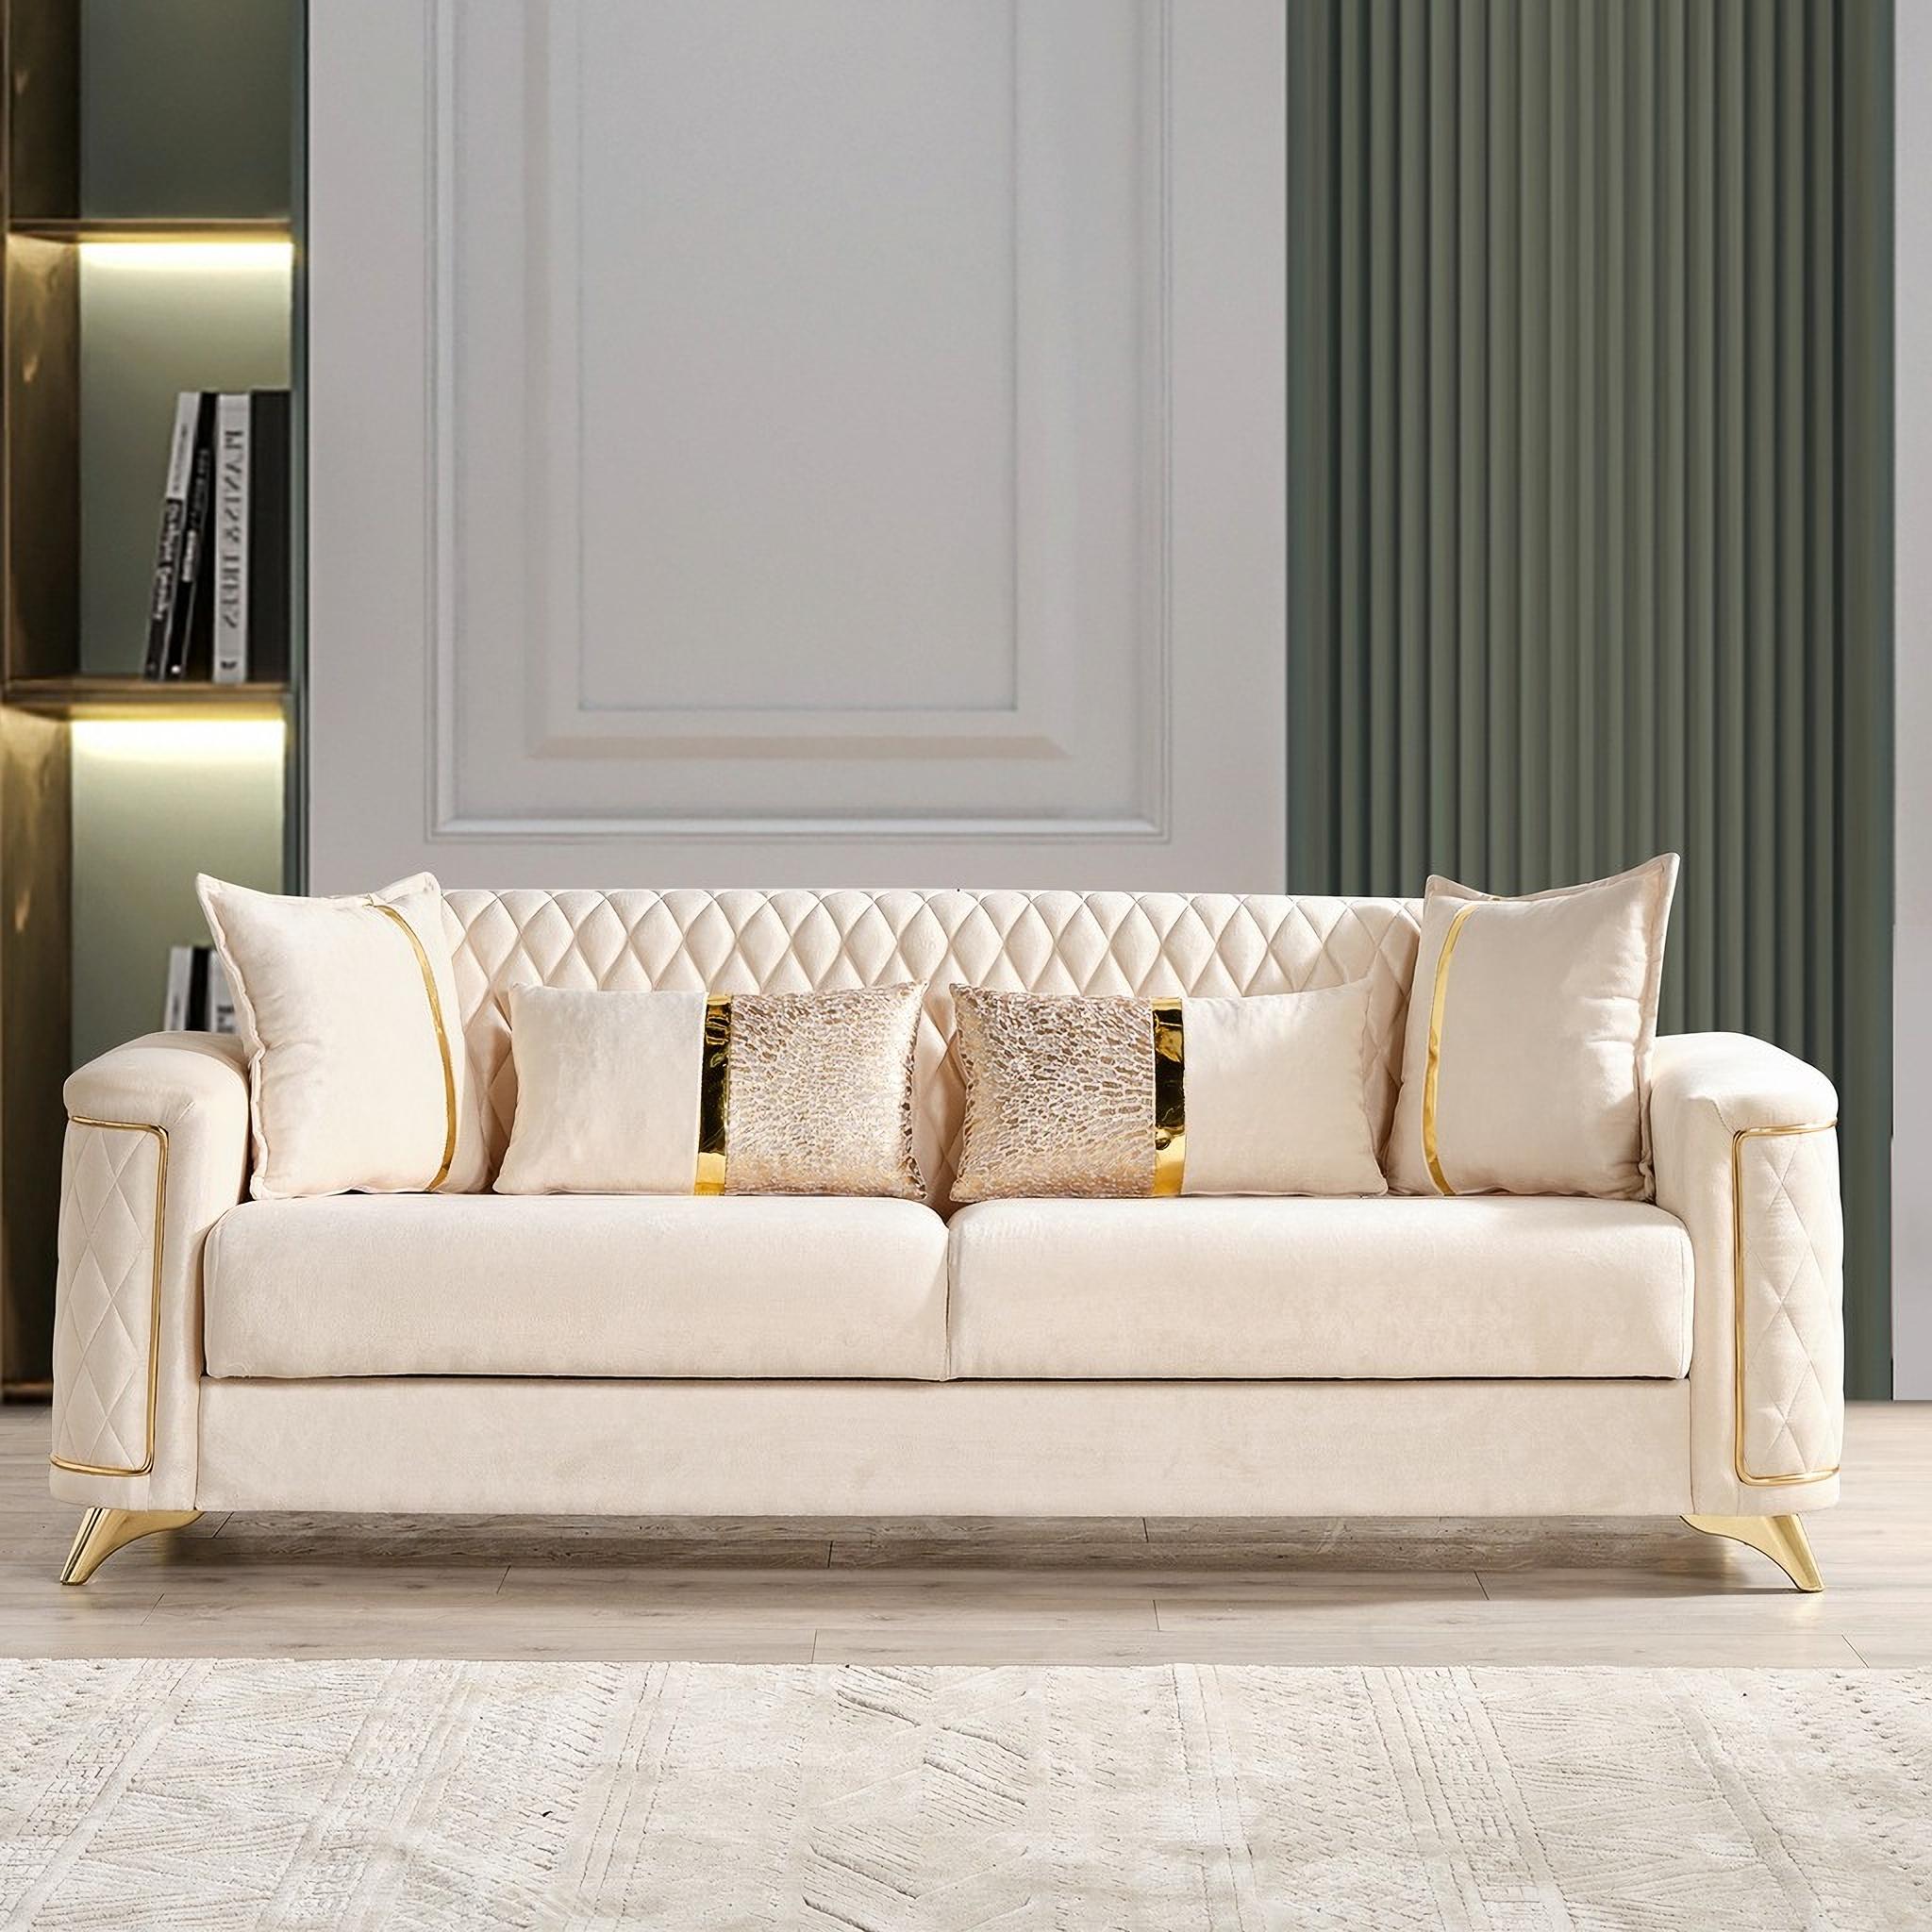 Contemporary, Modern Sofa Sleeper Luna 601955551953 in Ivory Fabric